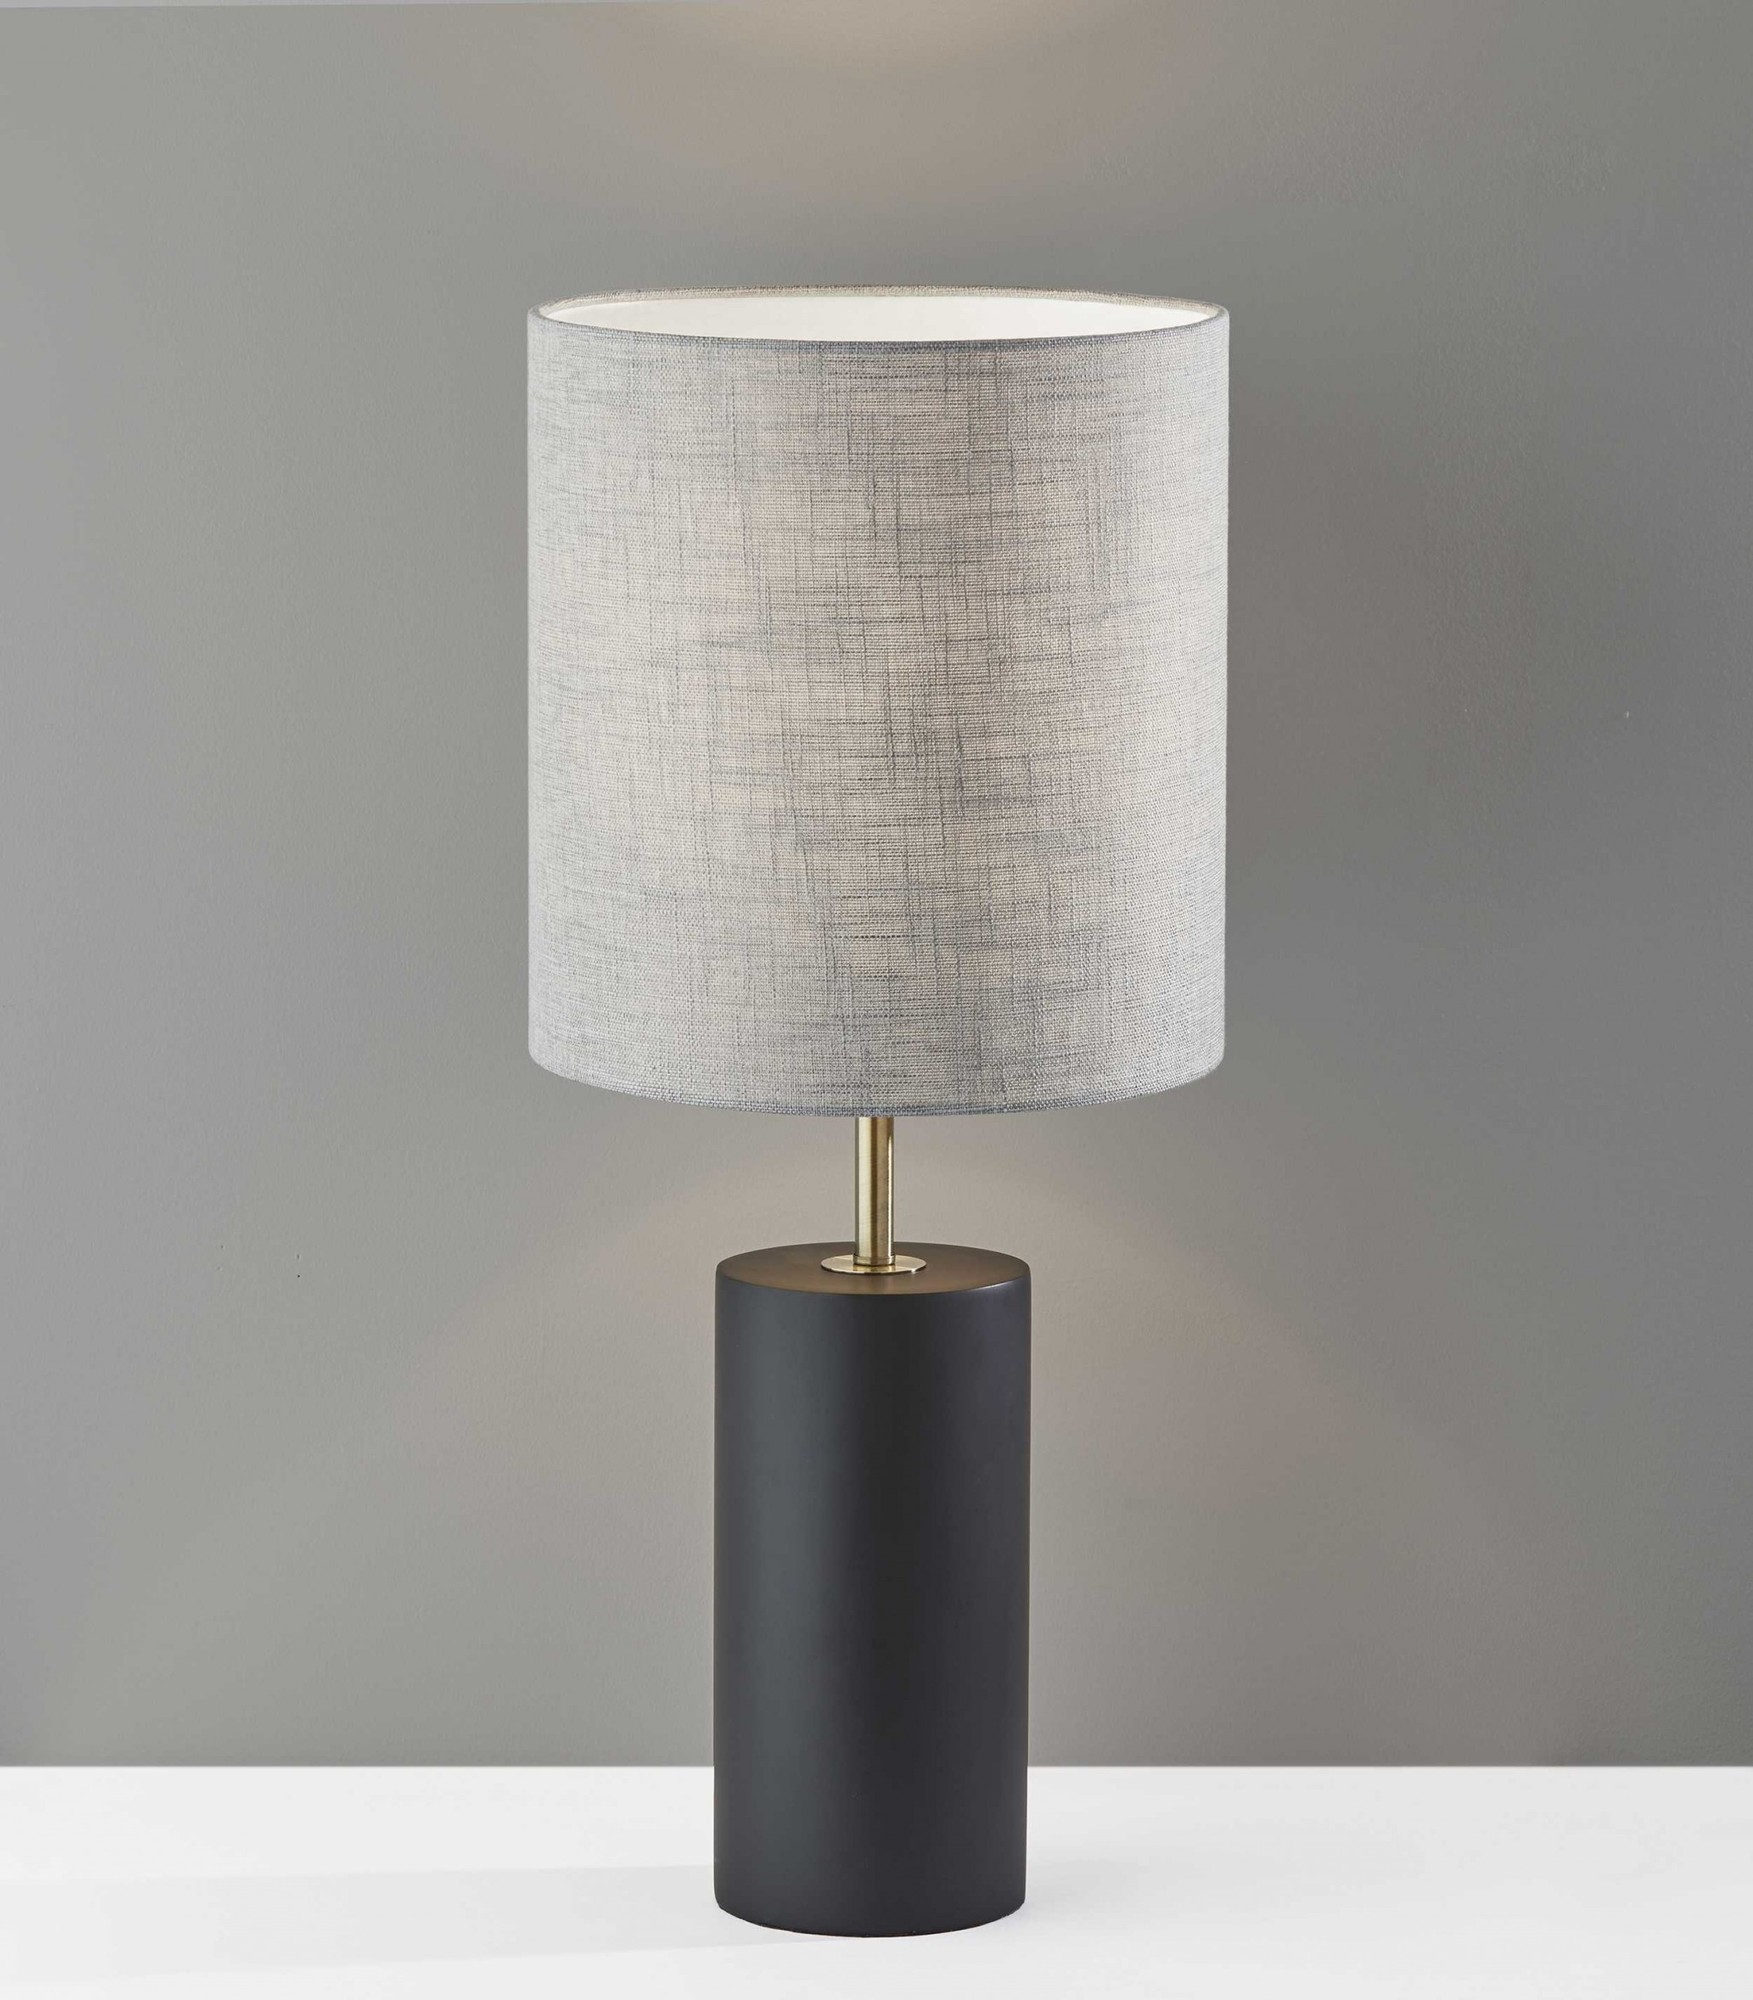 13" X 13" X 30.5" Black Wood Table Lamp